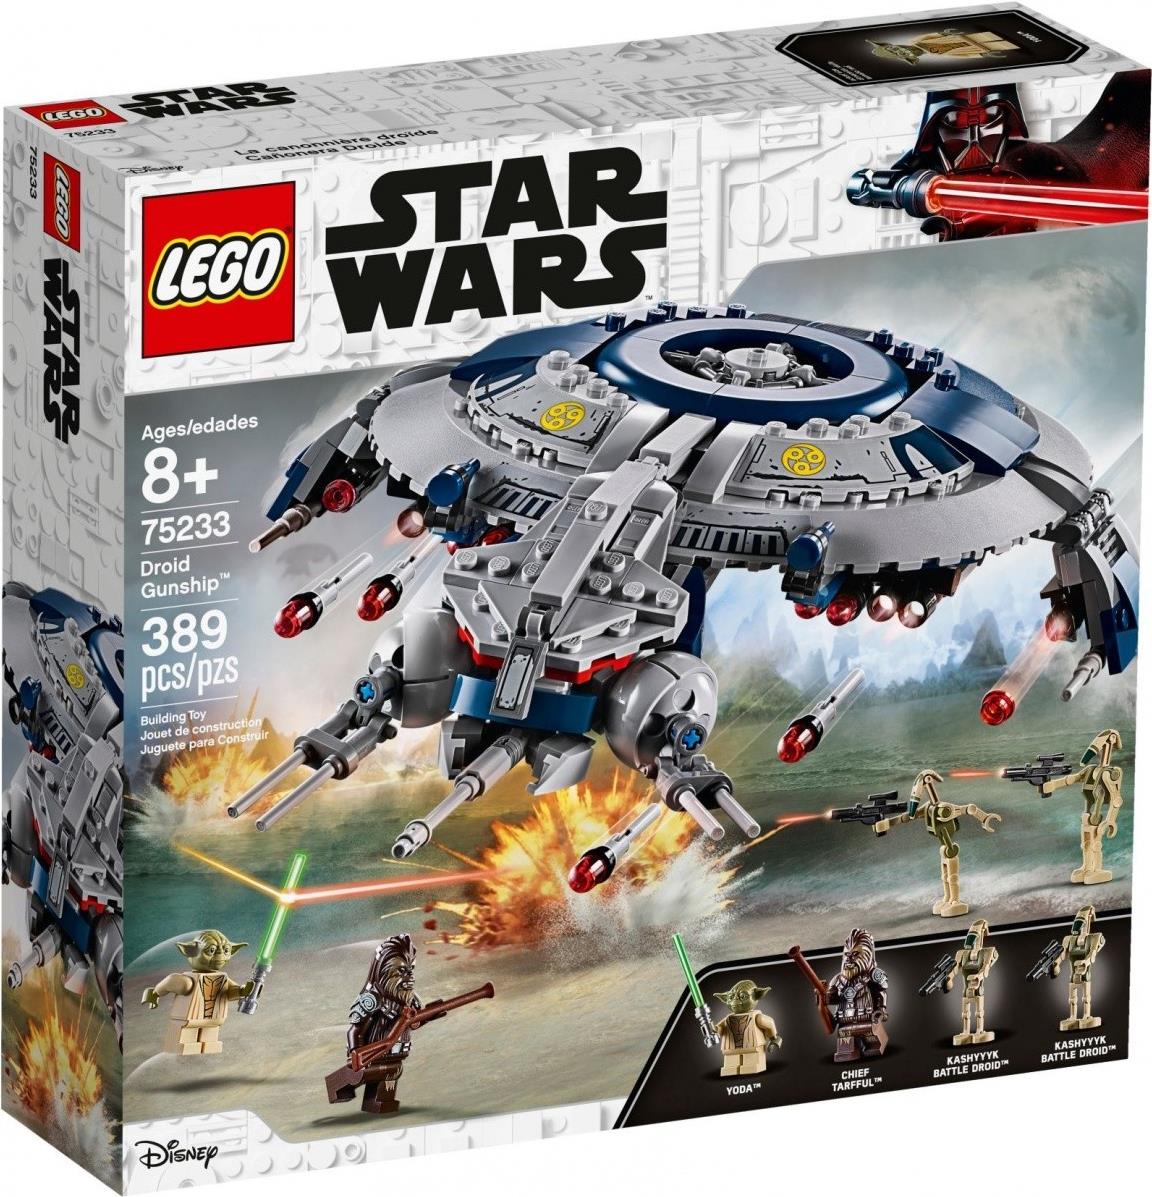 LEGO Star Wars 75233 Droid Gunship (75233)